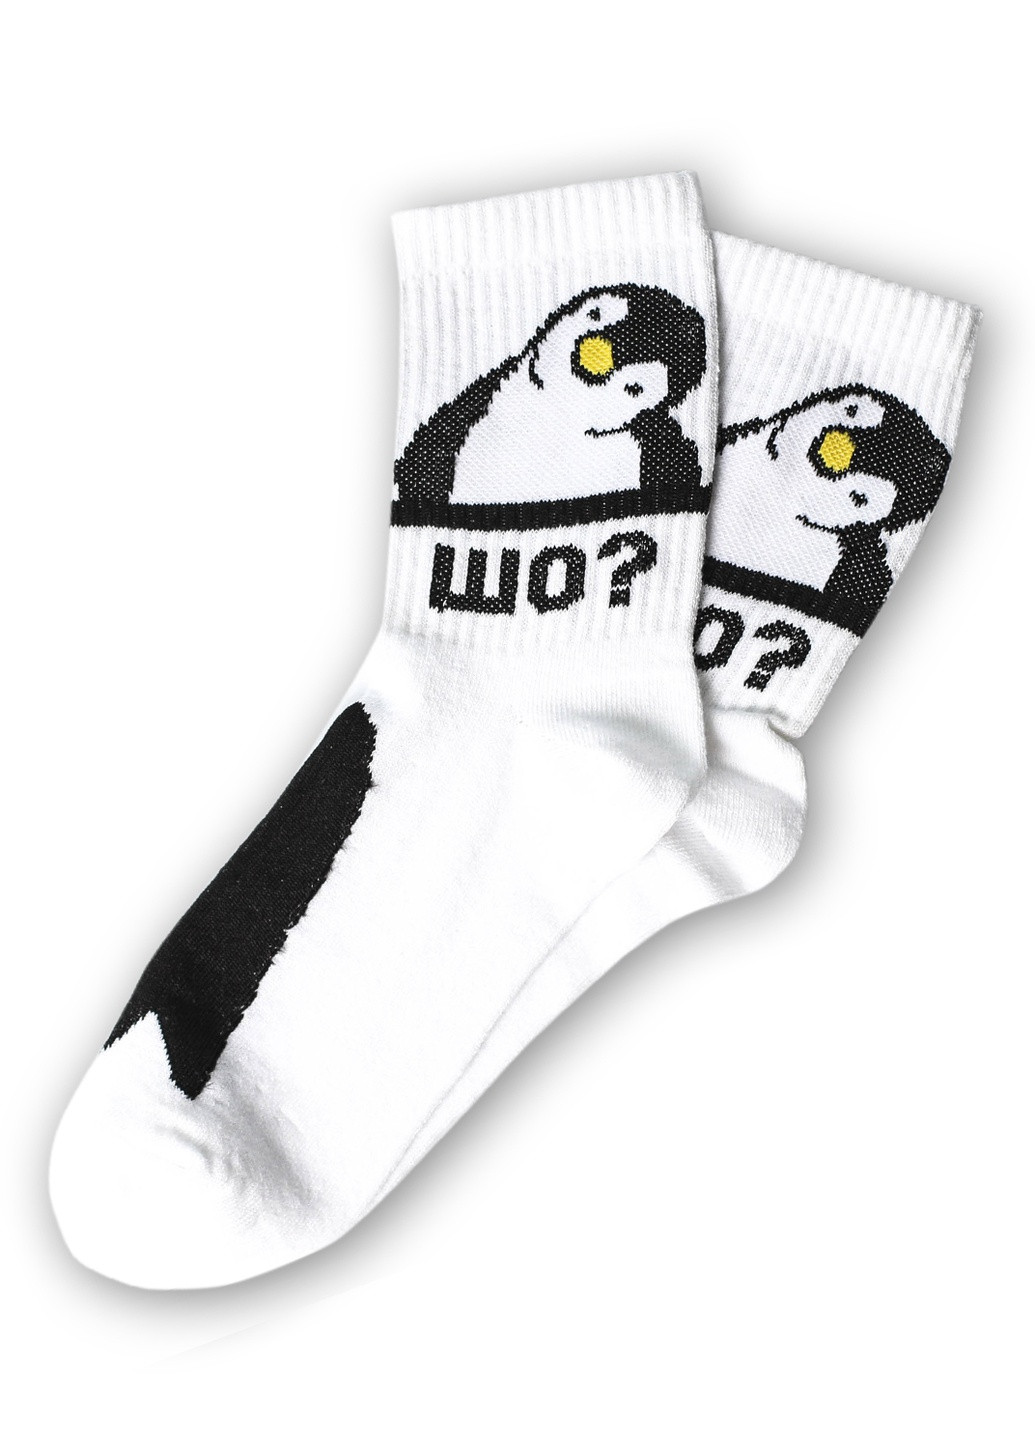 Носки Пингвин. Шо Rock'n'socks высокие (211258863)